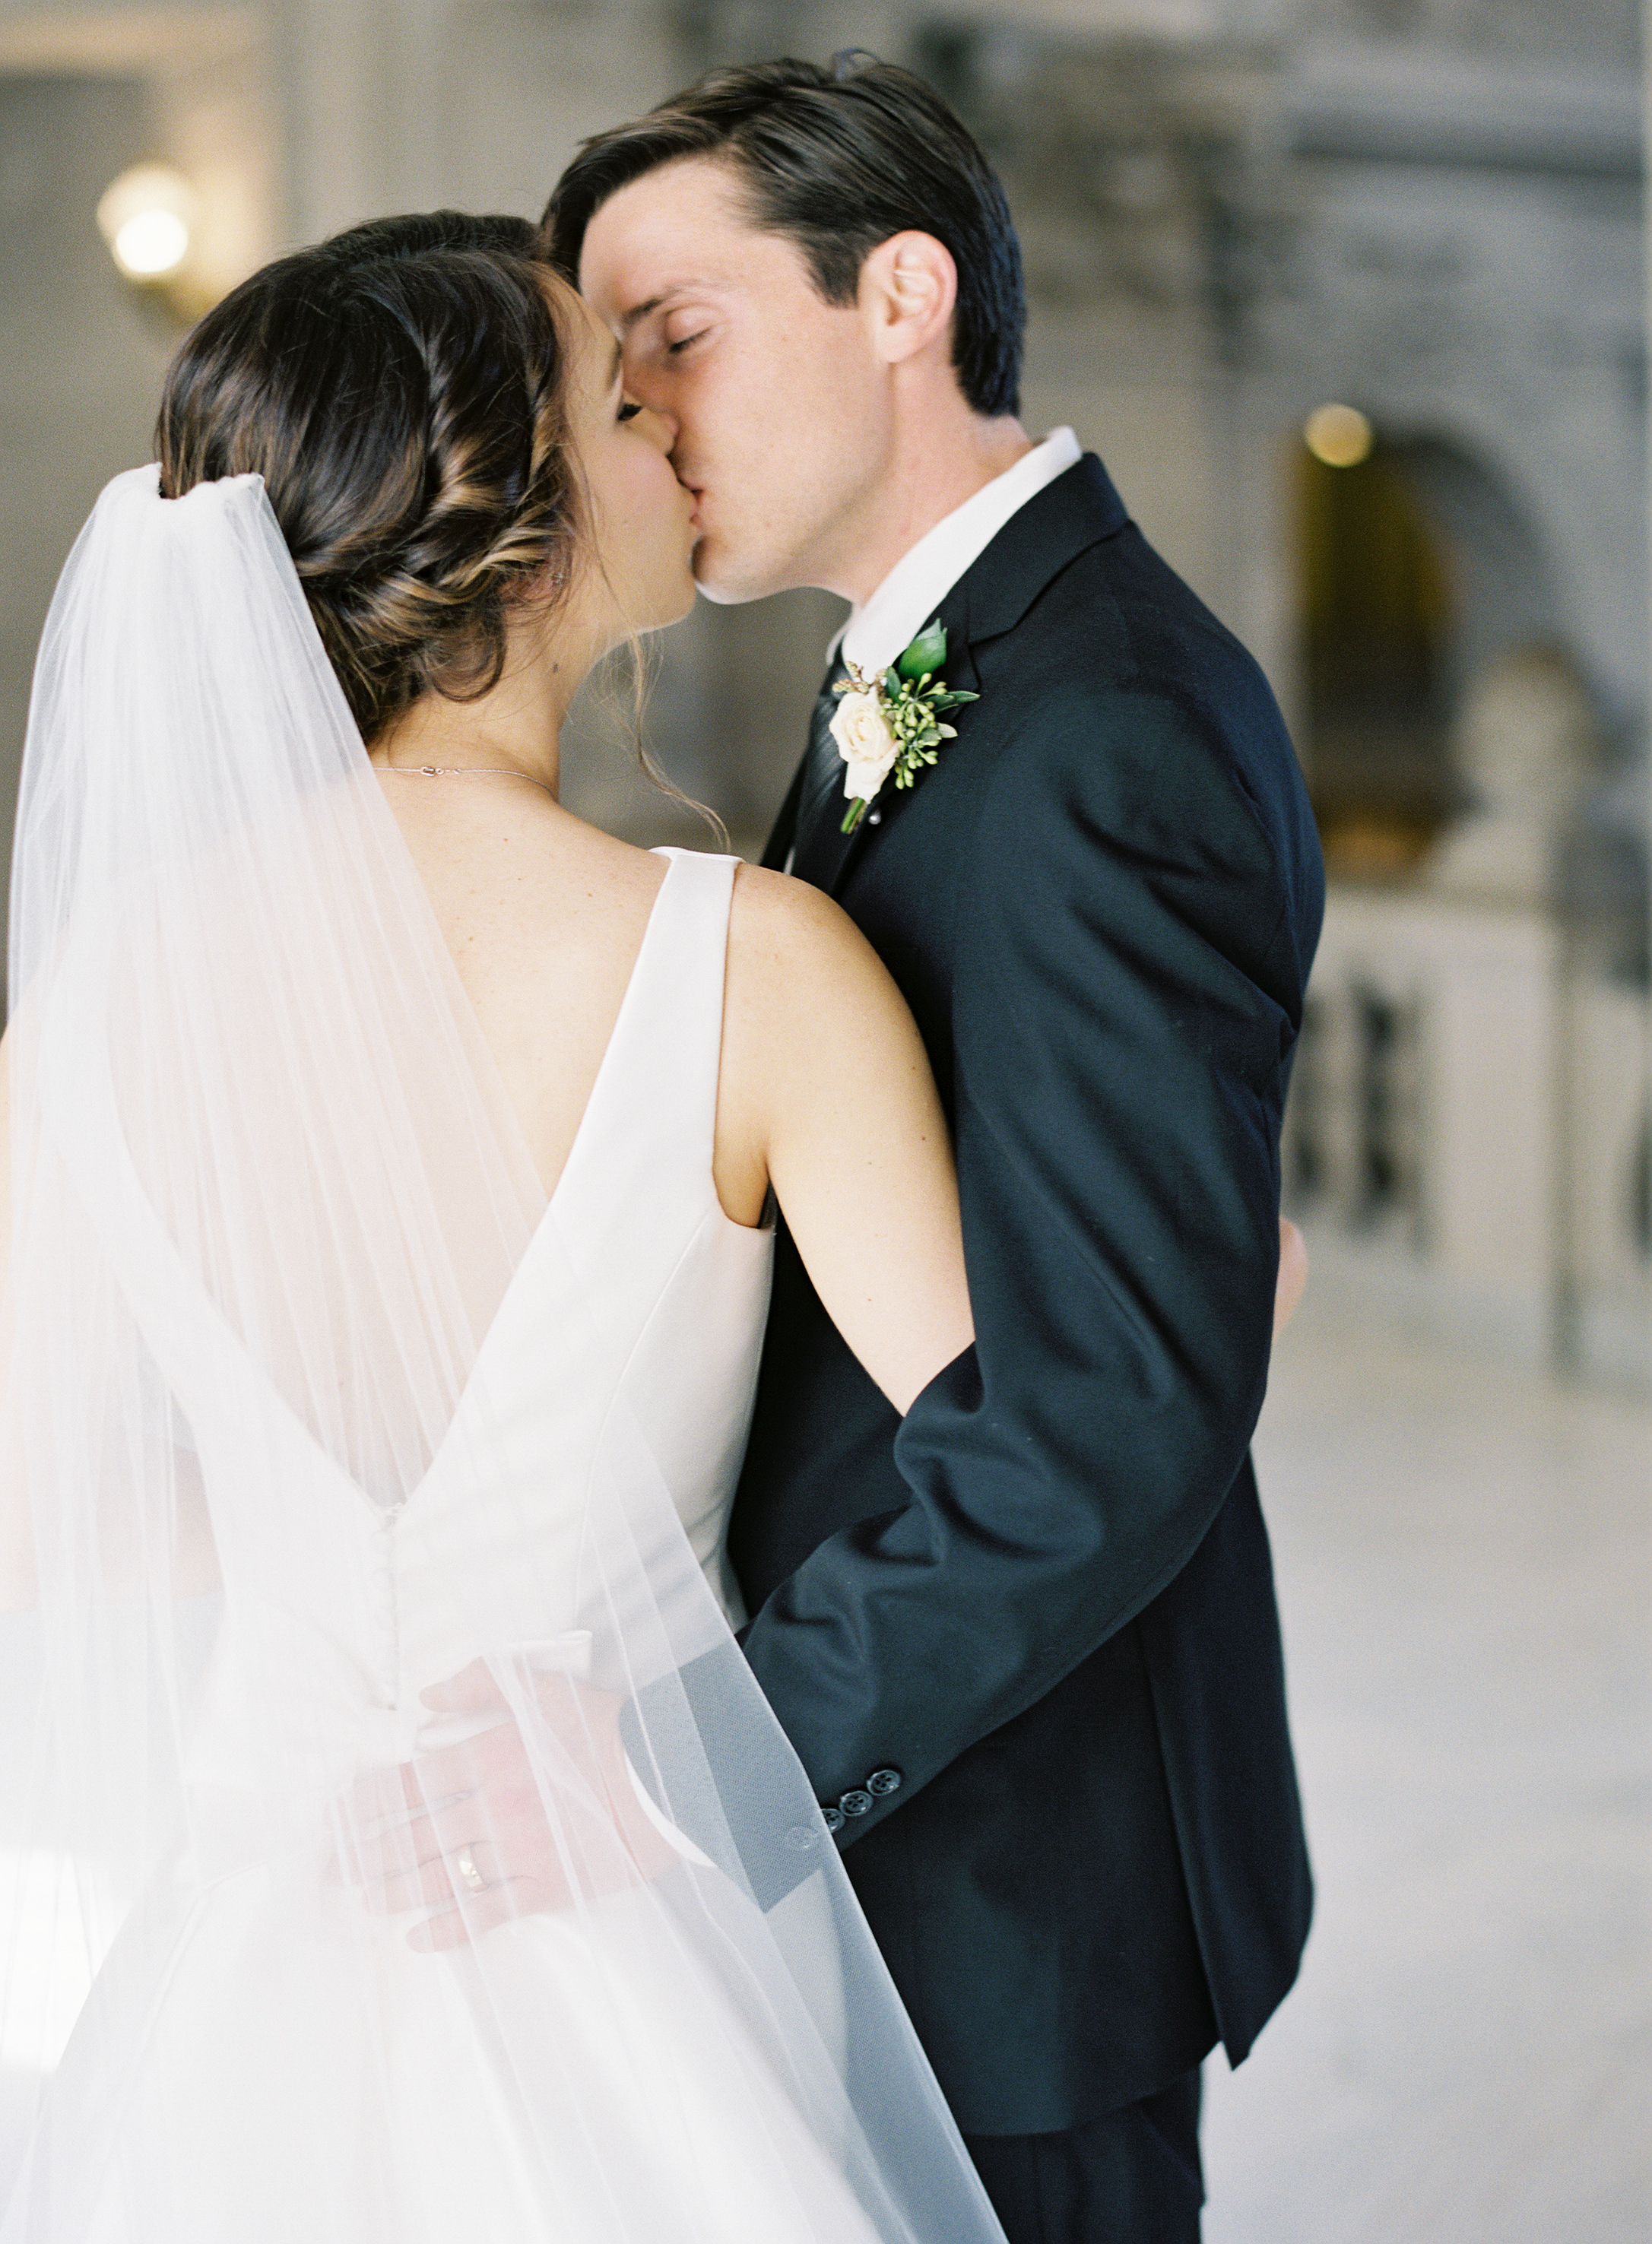 Meghan Mehan Photography - California Wedding Photographer | San Francisco City Hall Wedding 020.jpg